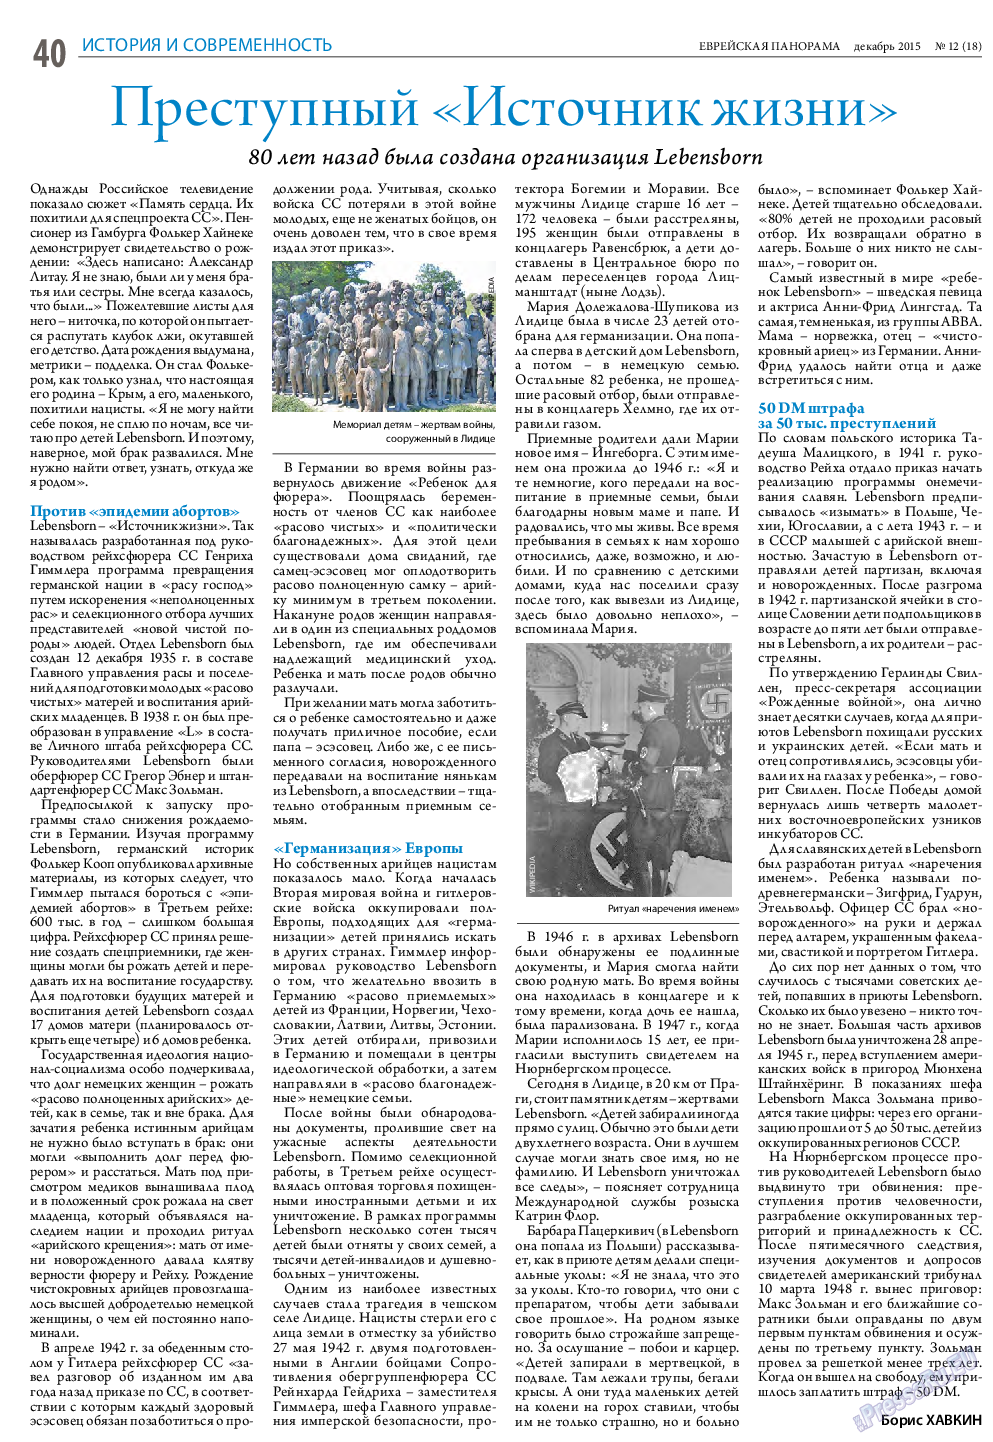 Еврейская панорама, газета. 2015 №12 стр.40